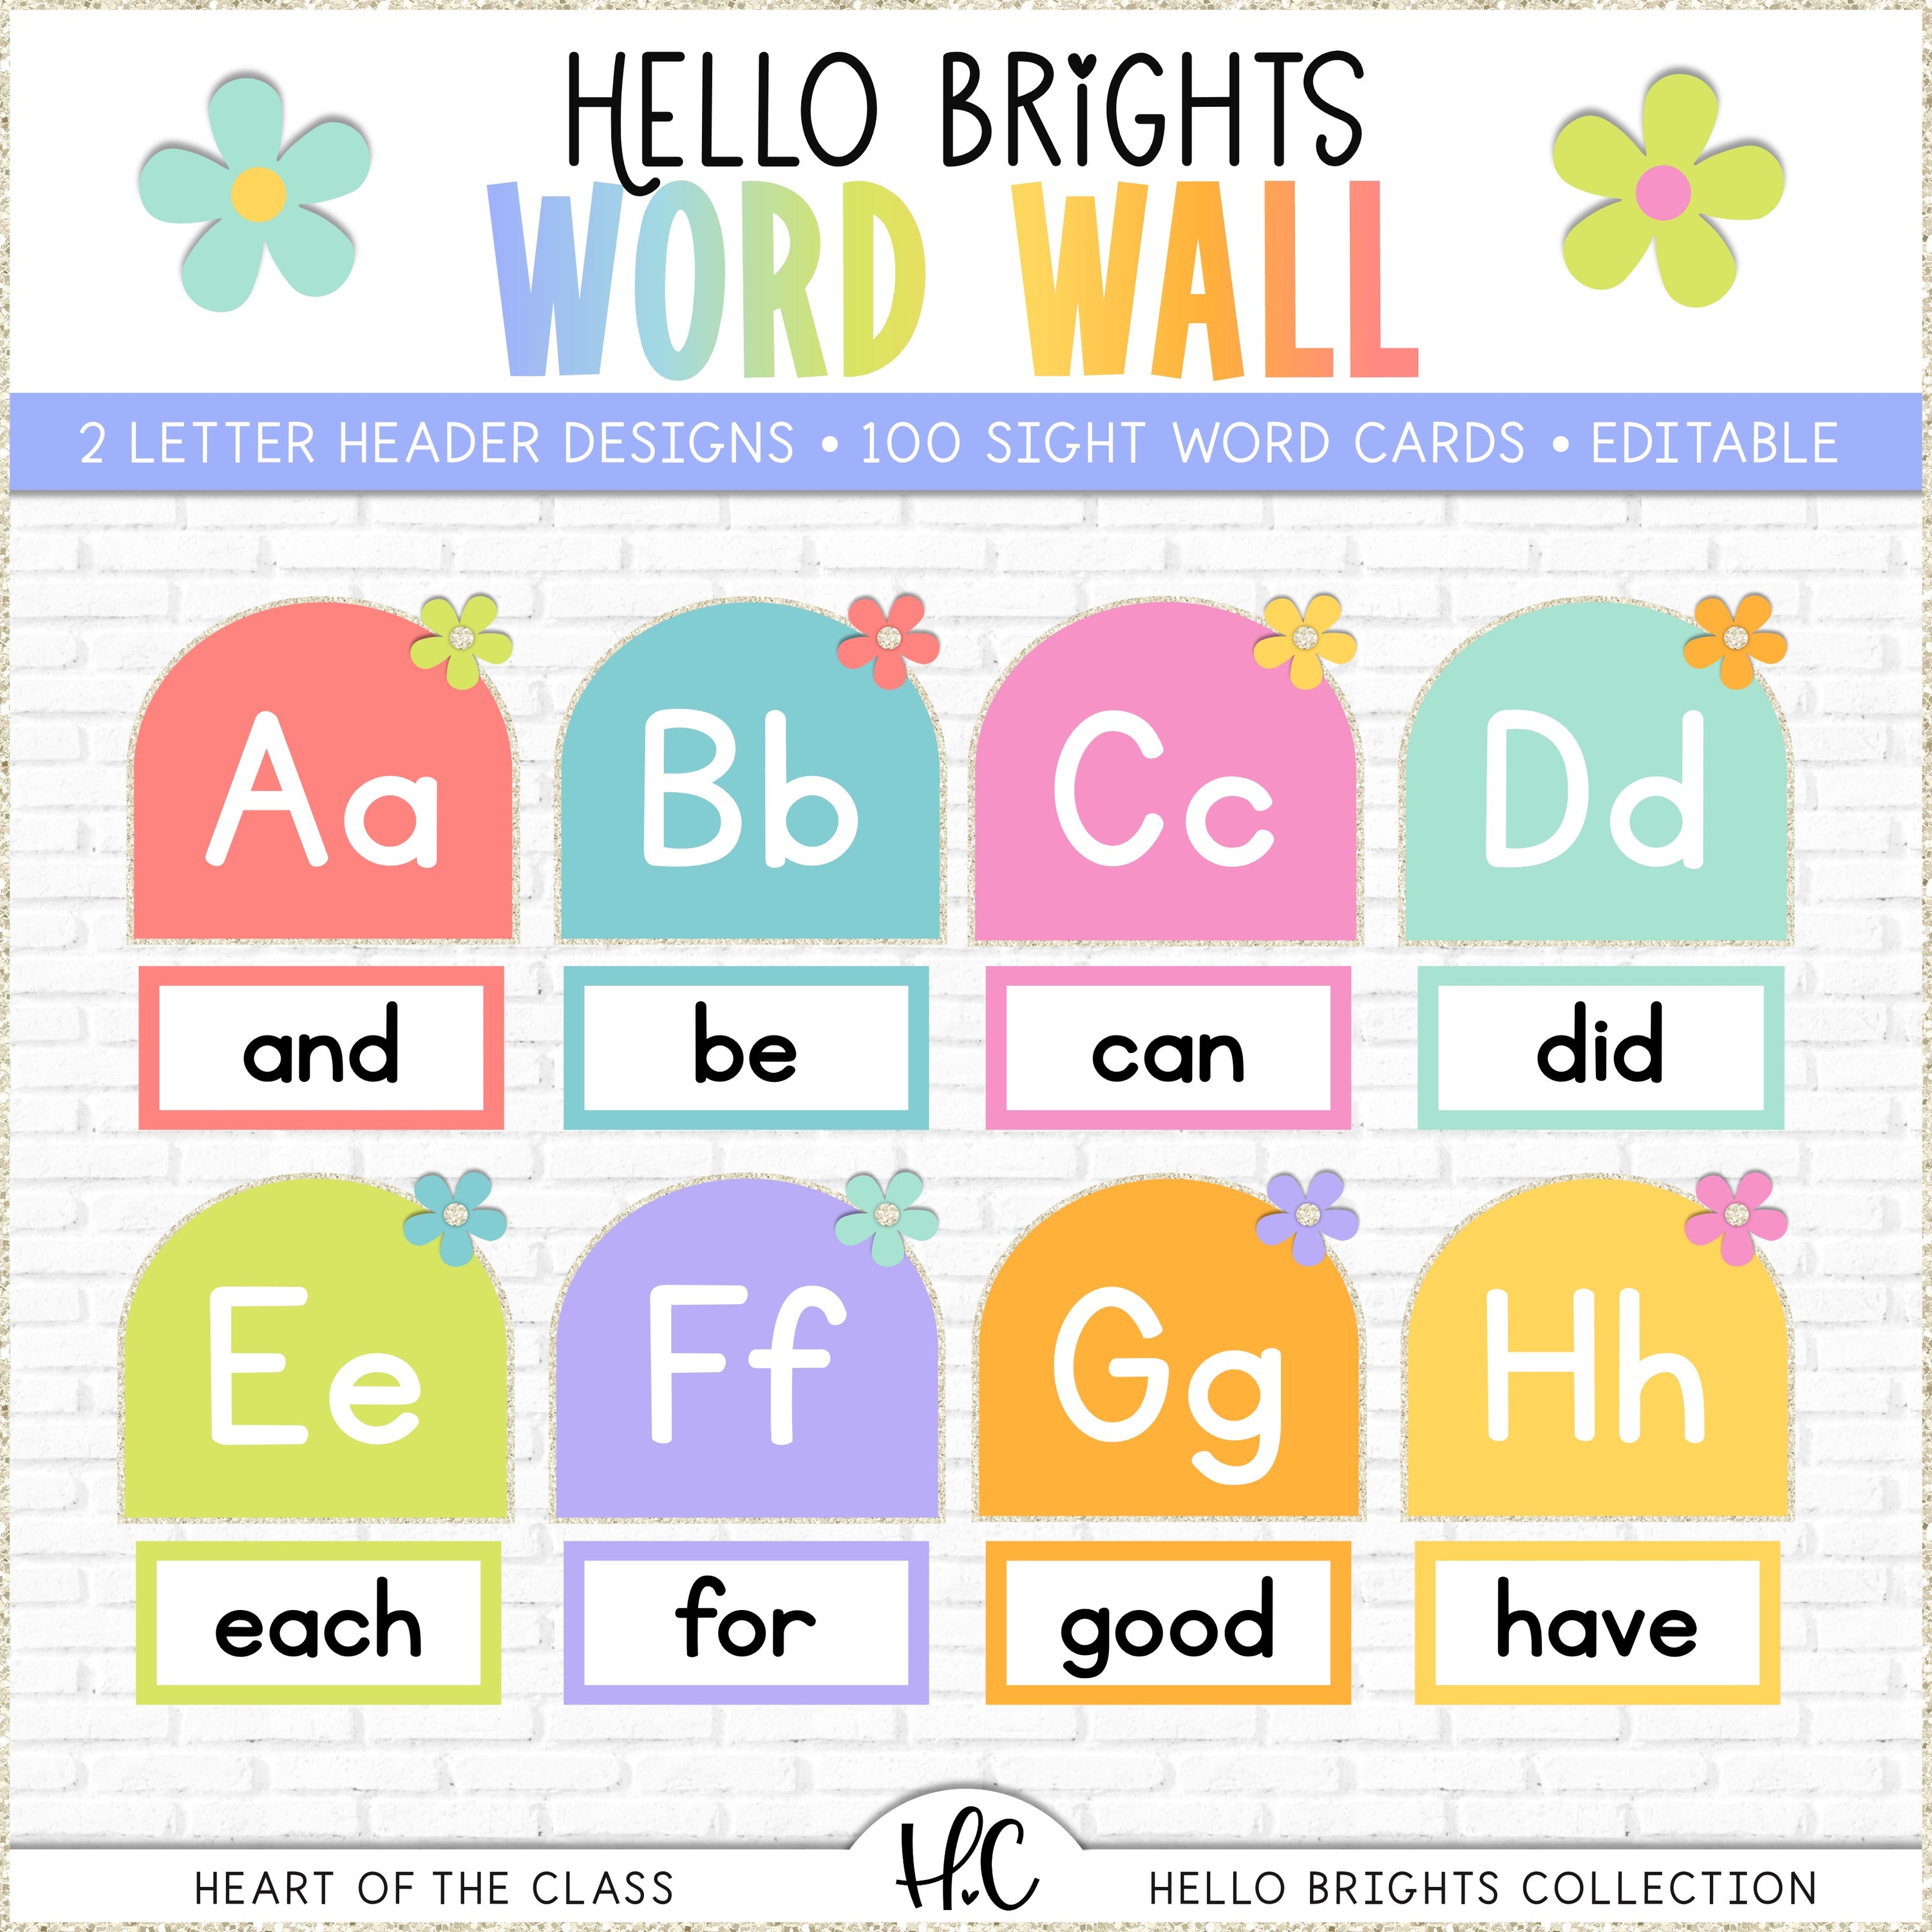 Hello Brights Word Wall